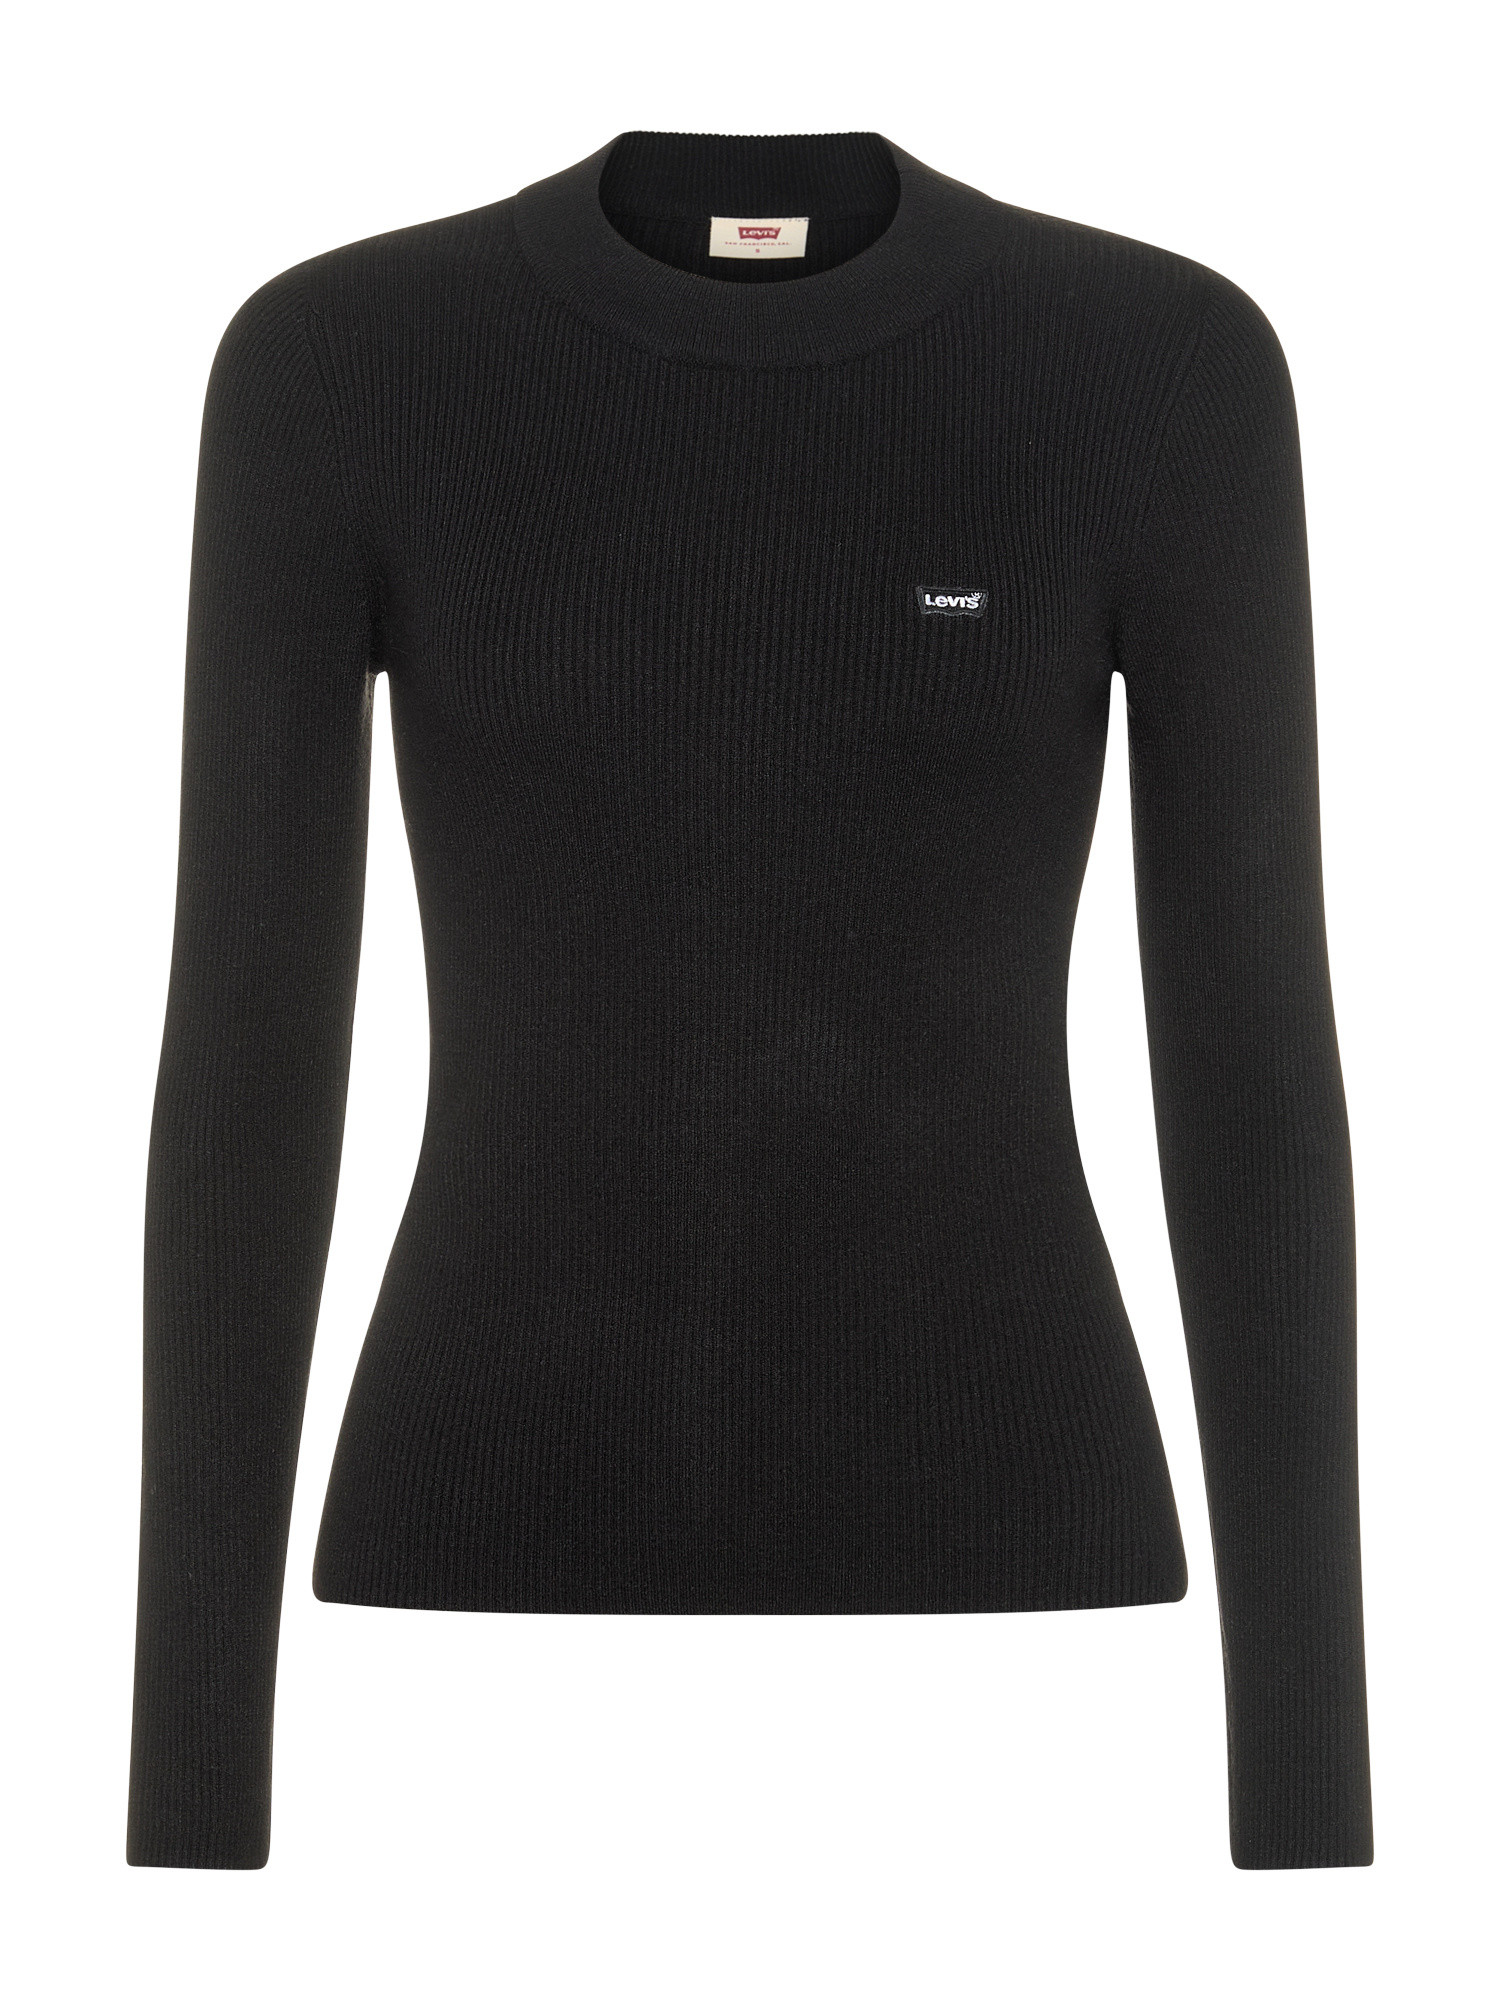 Levi's - Slim fit ribbed sweater, Black, large image number 0